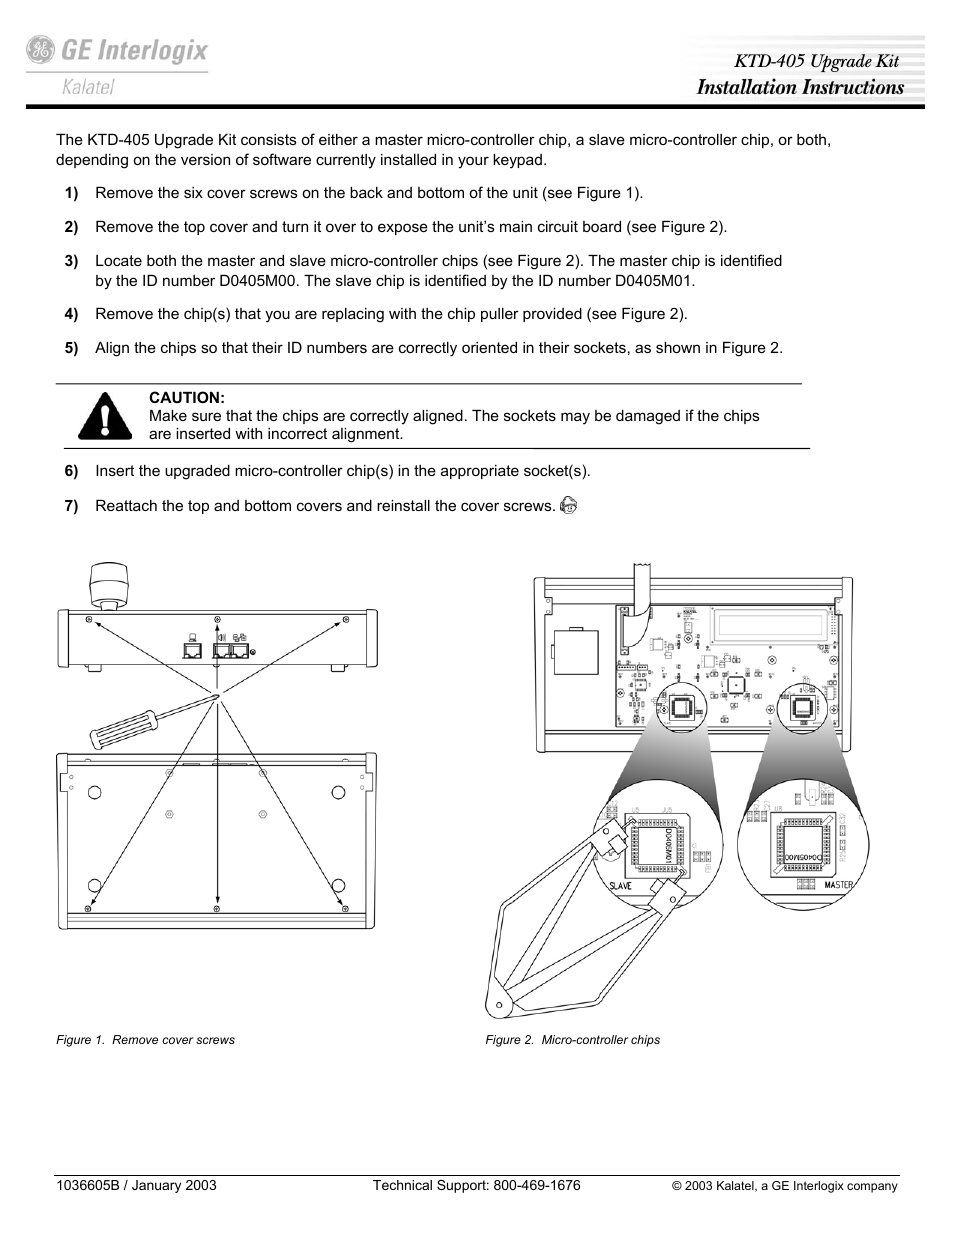 KTD-405 Series Upgrade Kit Installation Instructions